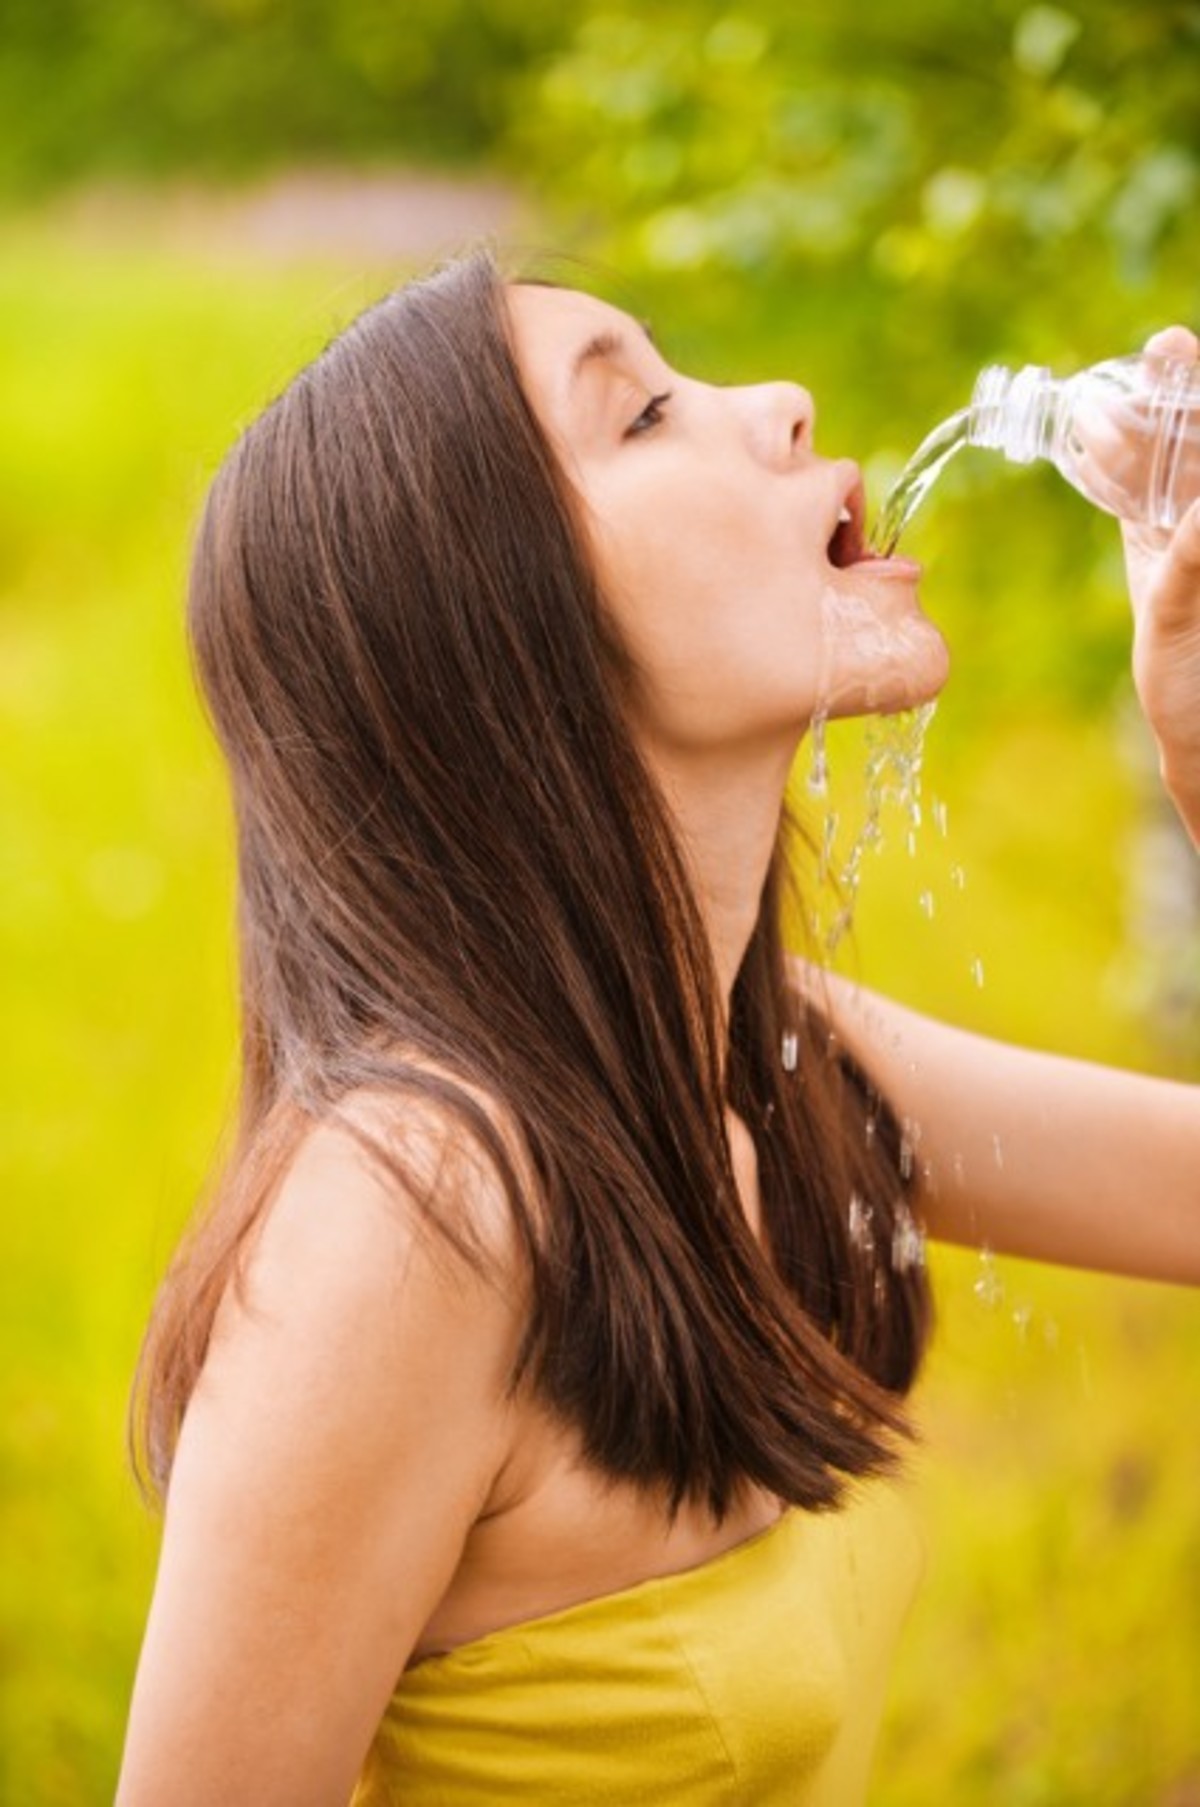 Тетки глотают. Девушка пьет воду. Девушка жажда. Девочка пьет воду. Женщина вода.